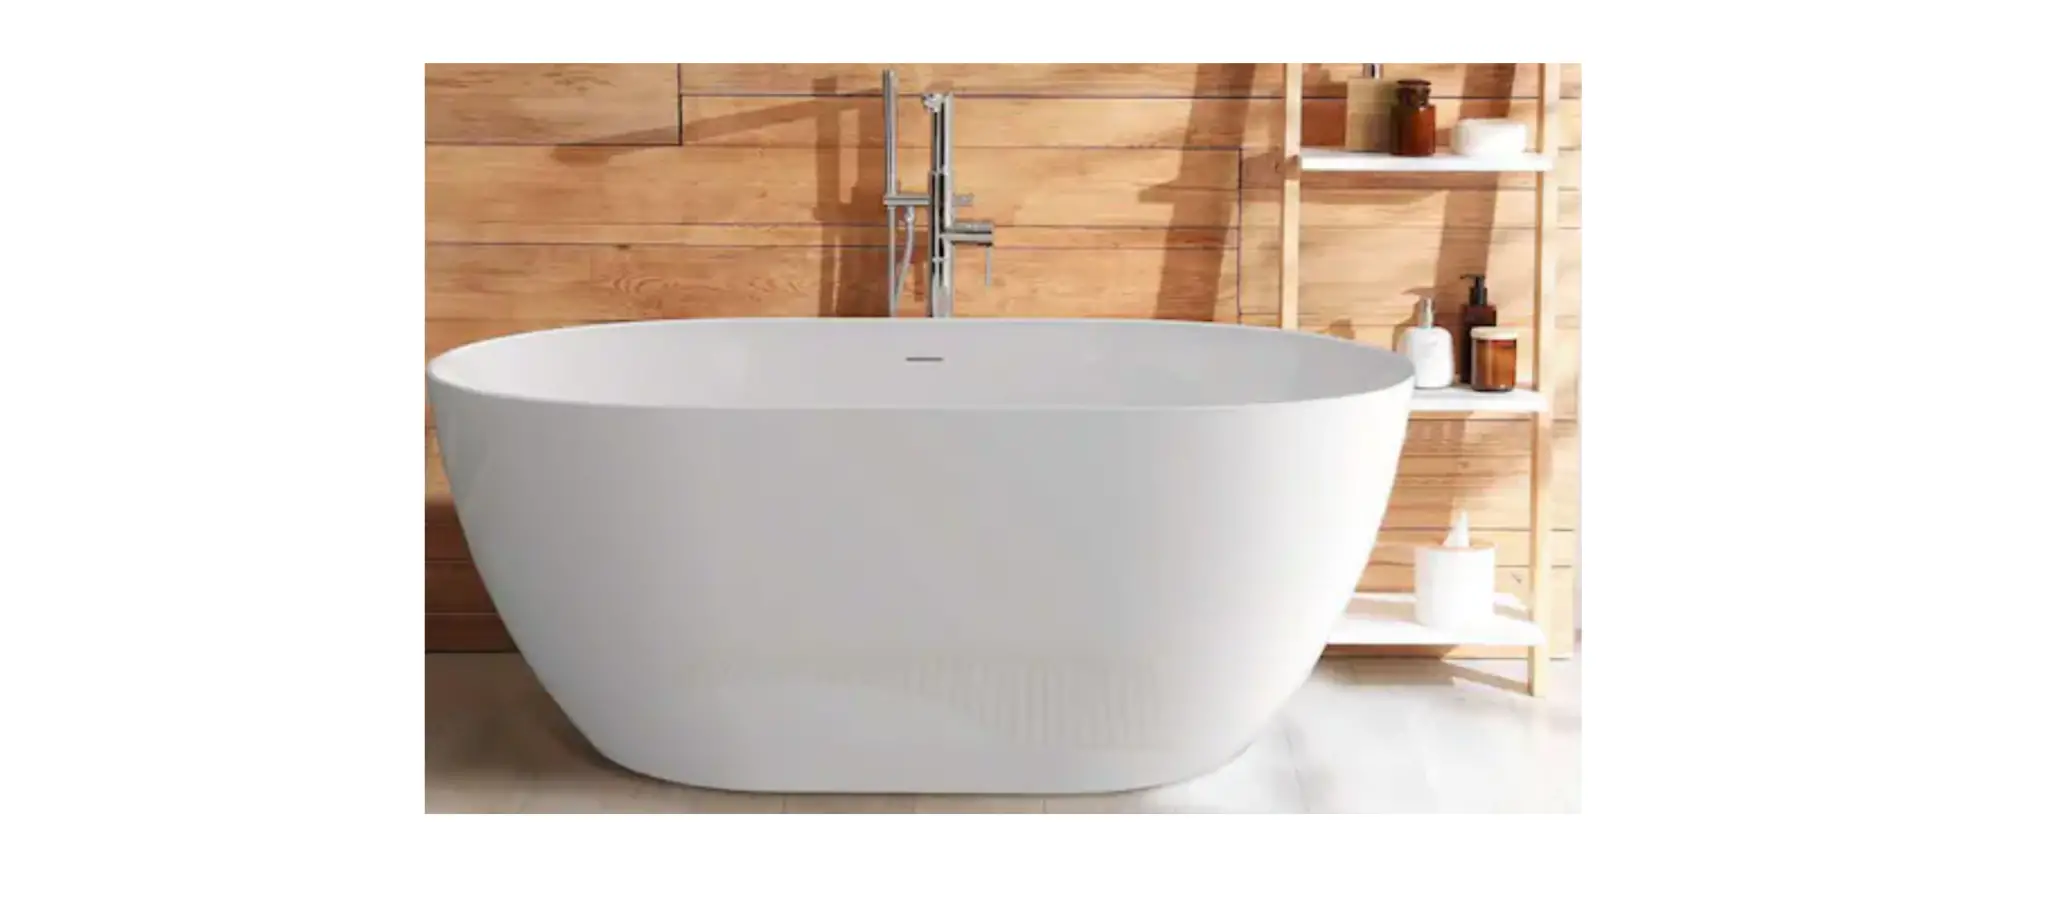 Acrylic Oval Flatbottom Freestanding Bathtub